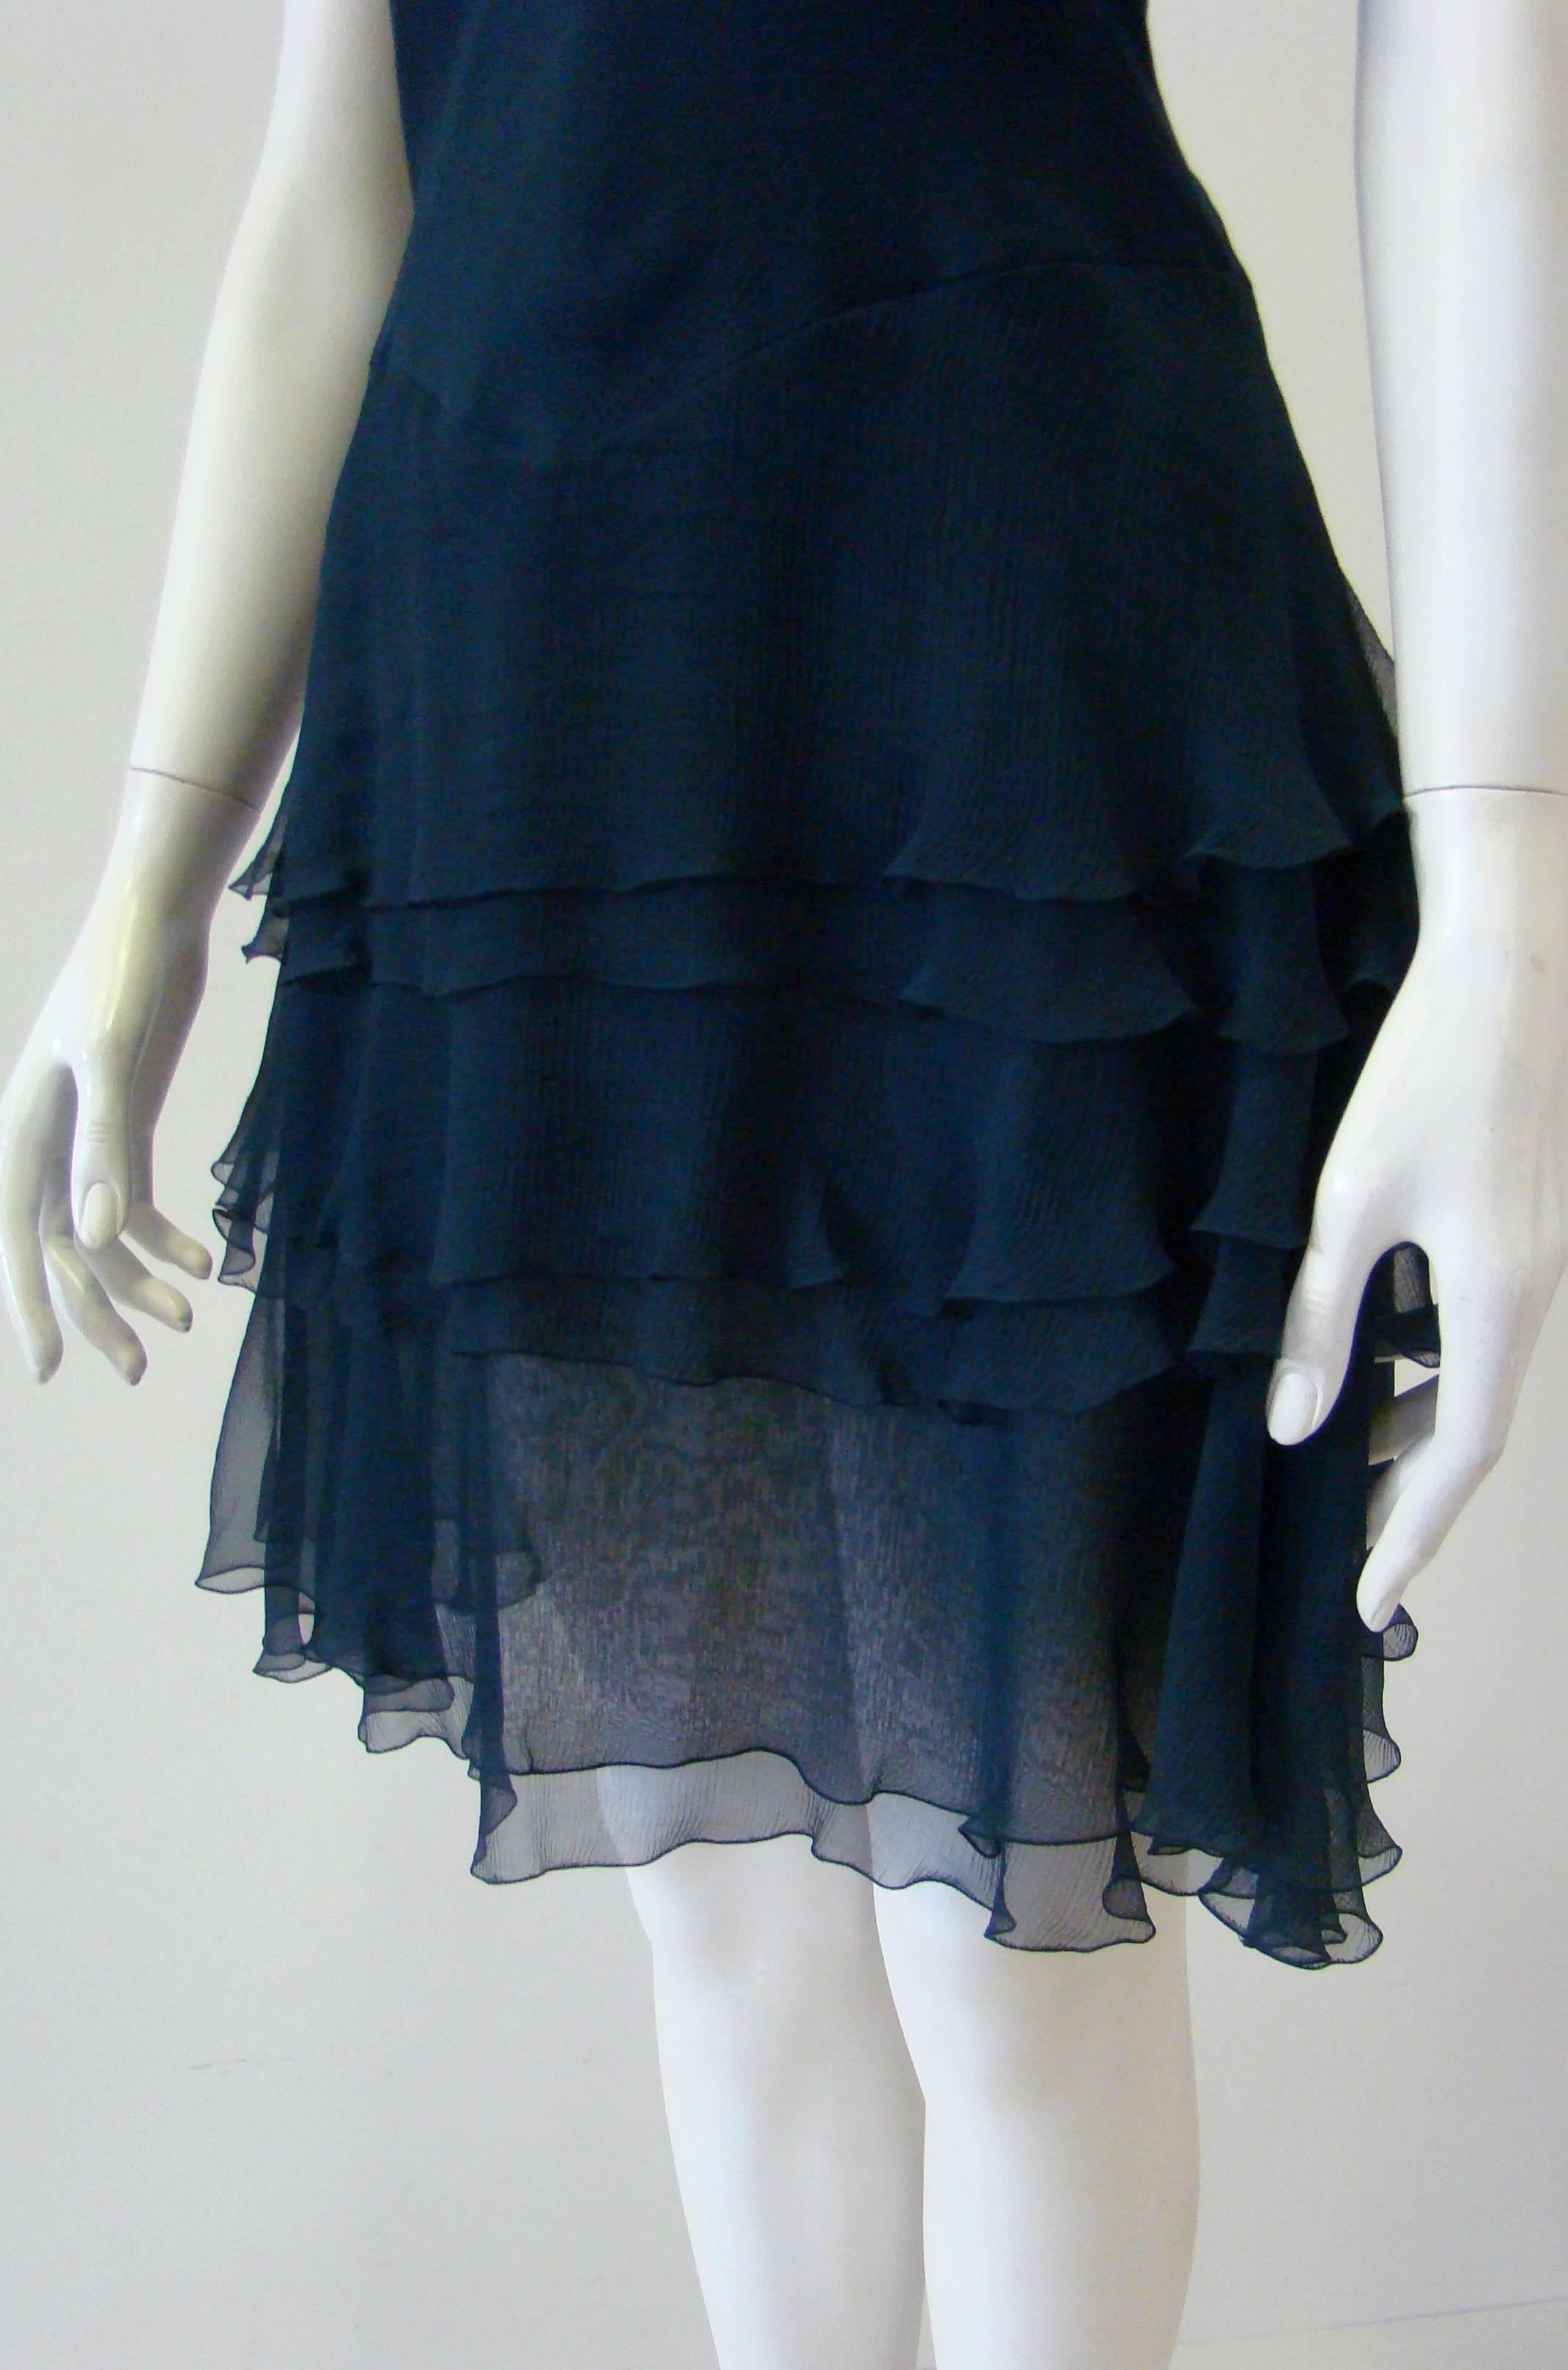 Loris Azzaro Silk Chiffon Cocktail Dress, 1990s For Sale 1